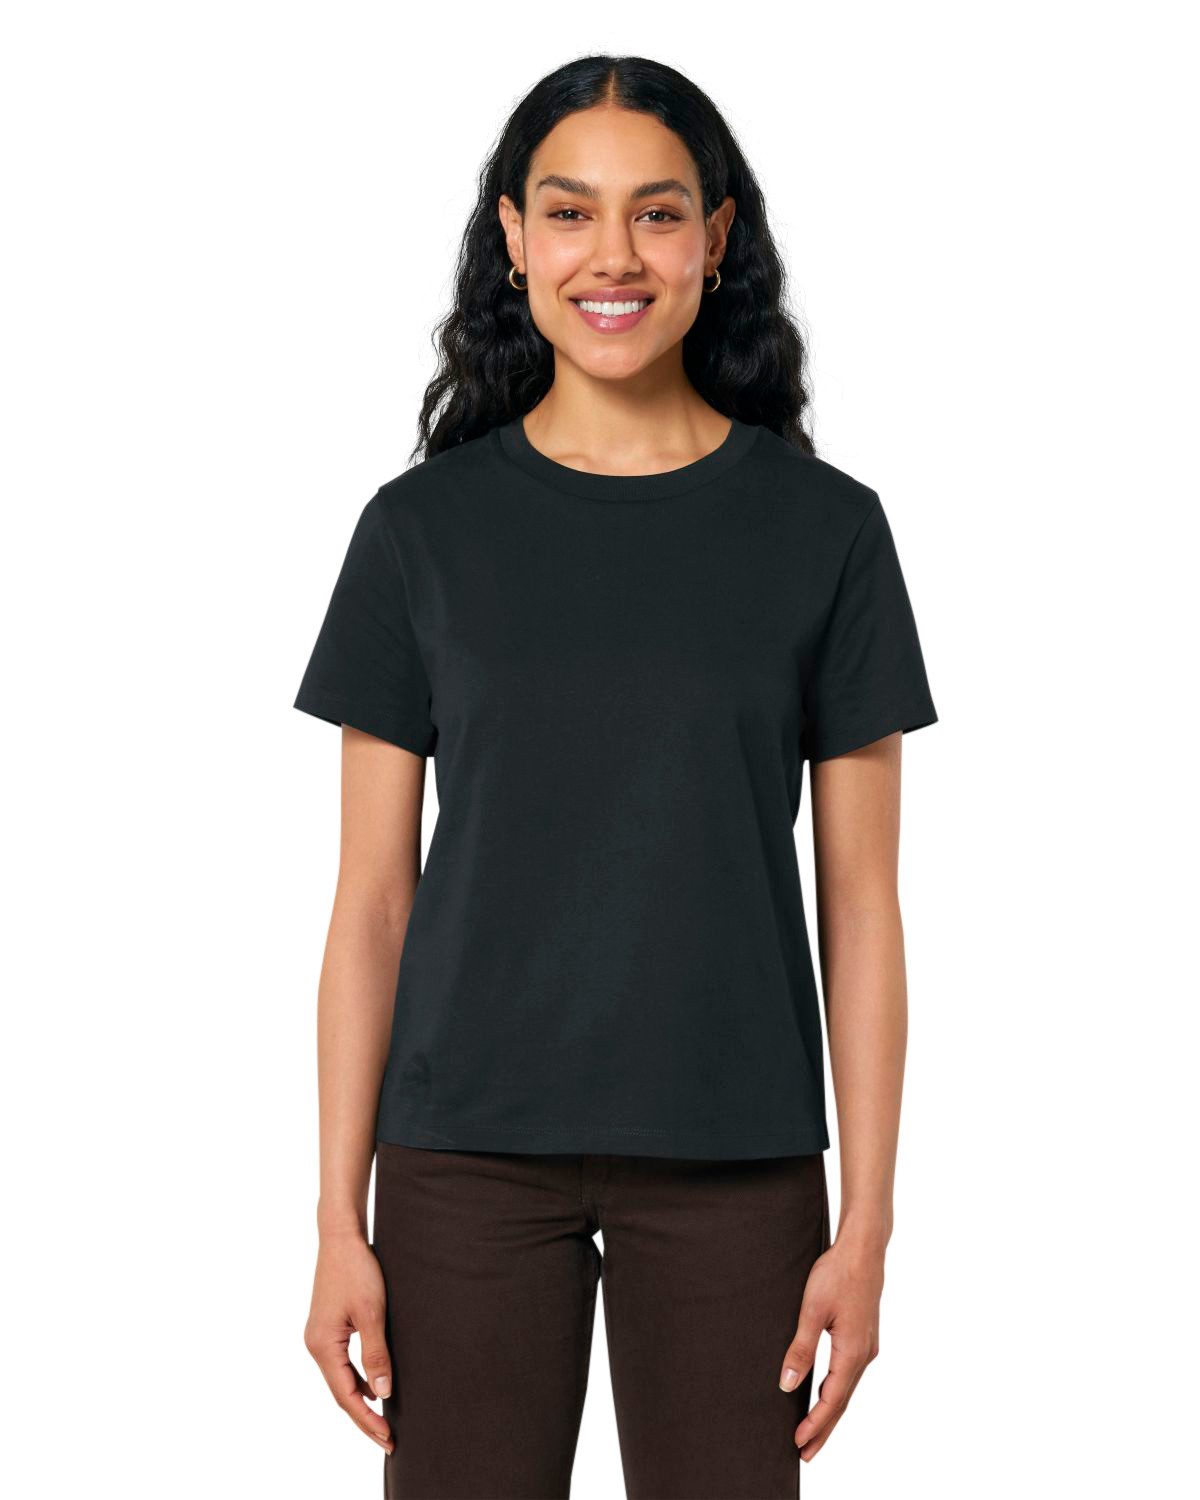 Hilltop T-Shirt Damen T-Shirt 100% Bio-Baumwolle, Rundhals, Sommer Basic Kurzarm Shirt